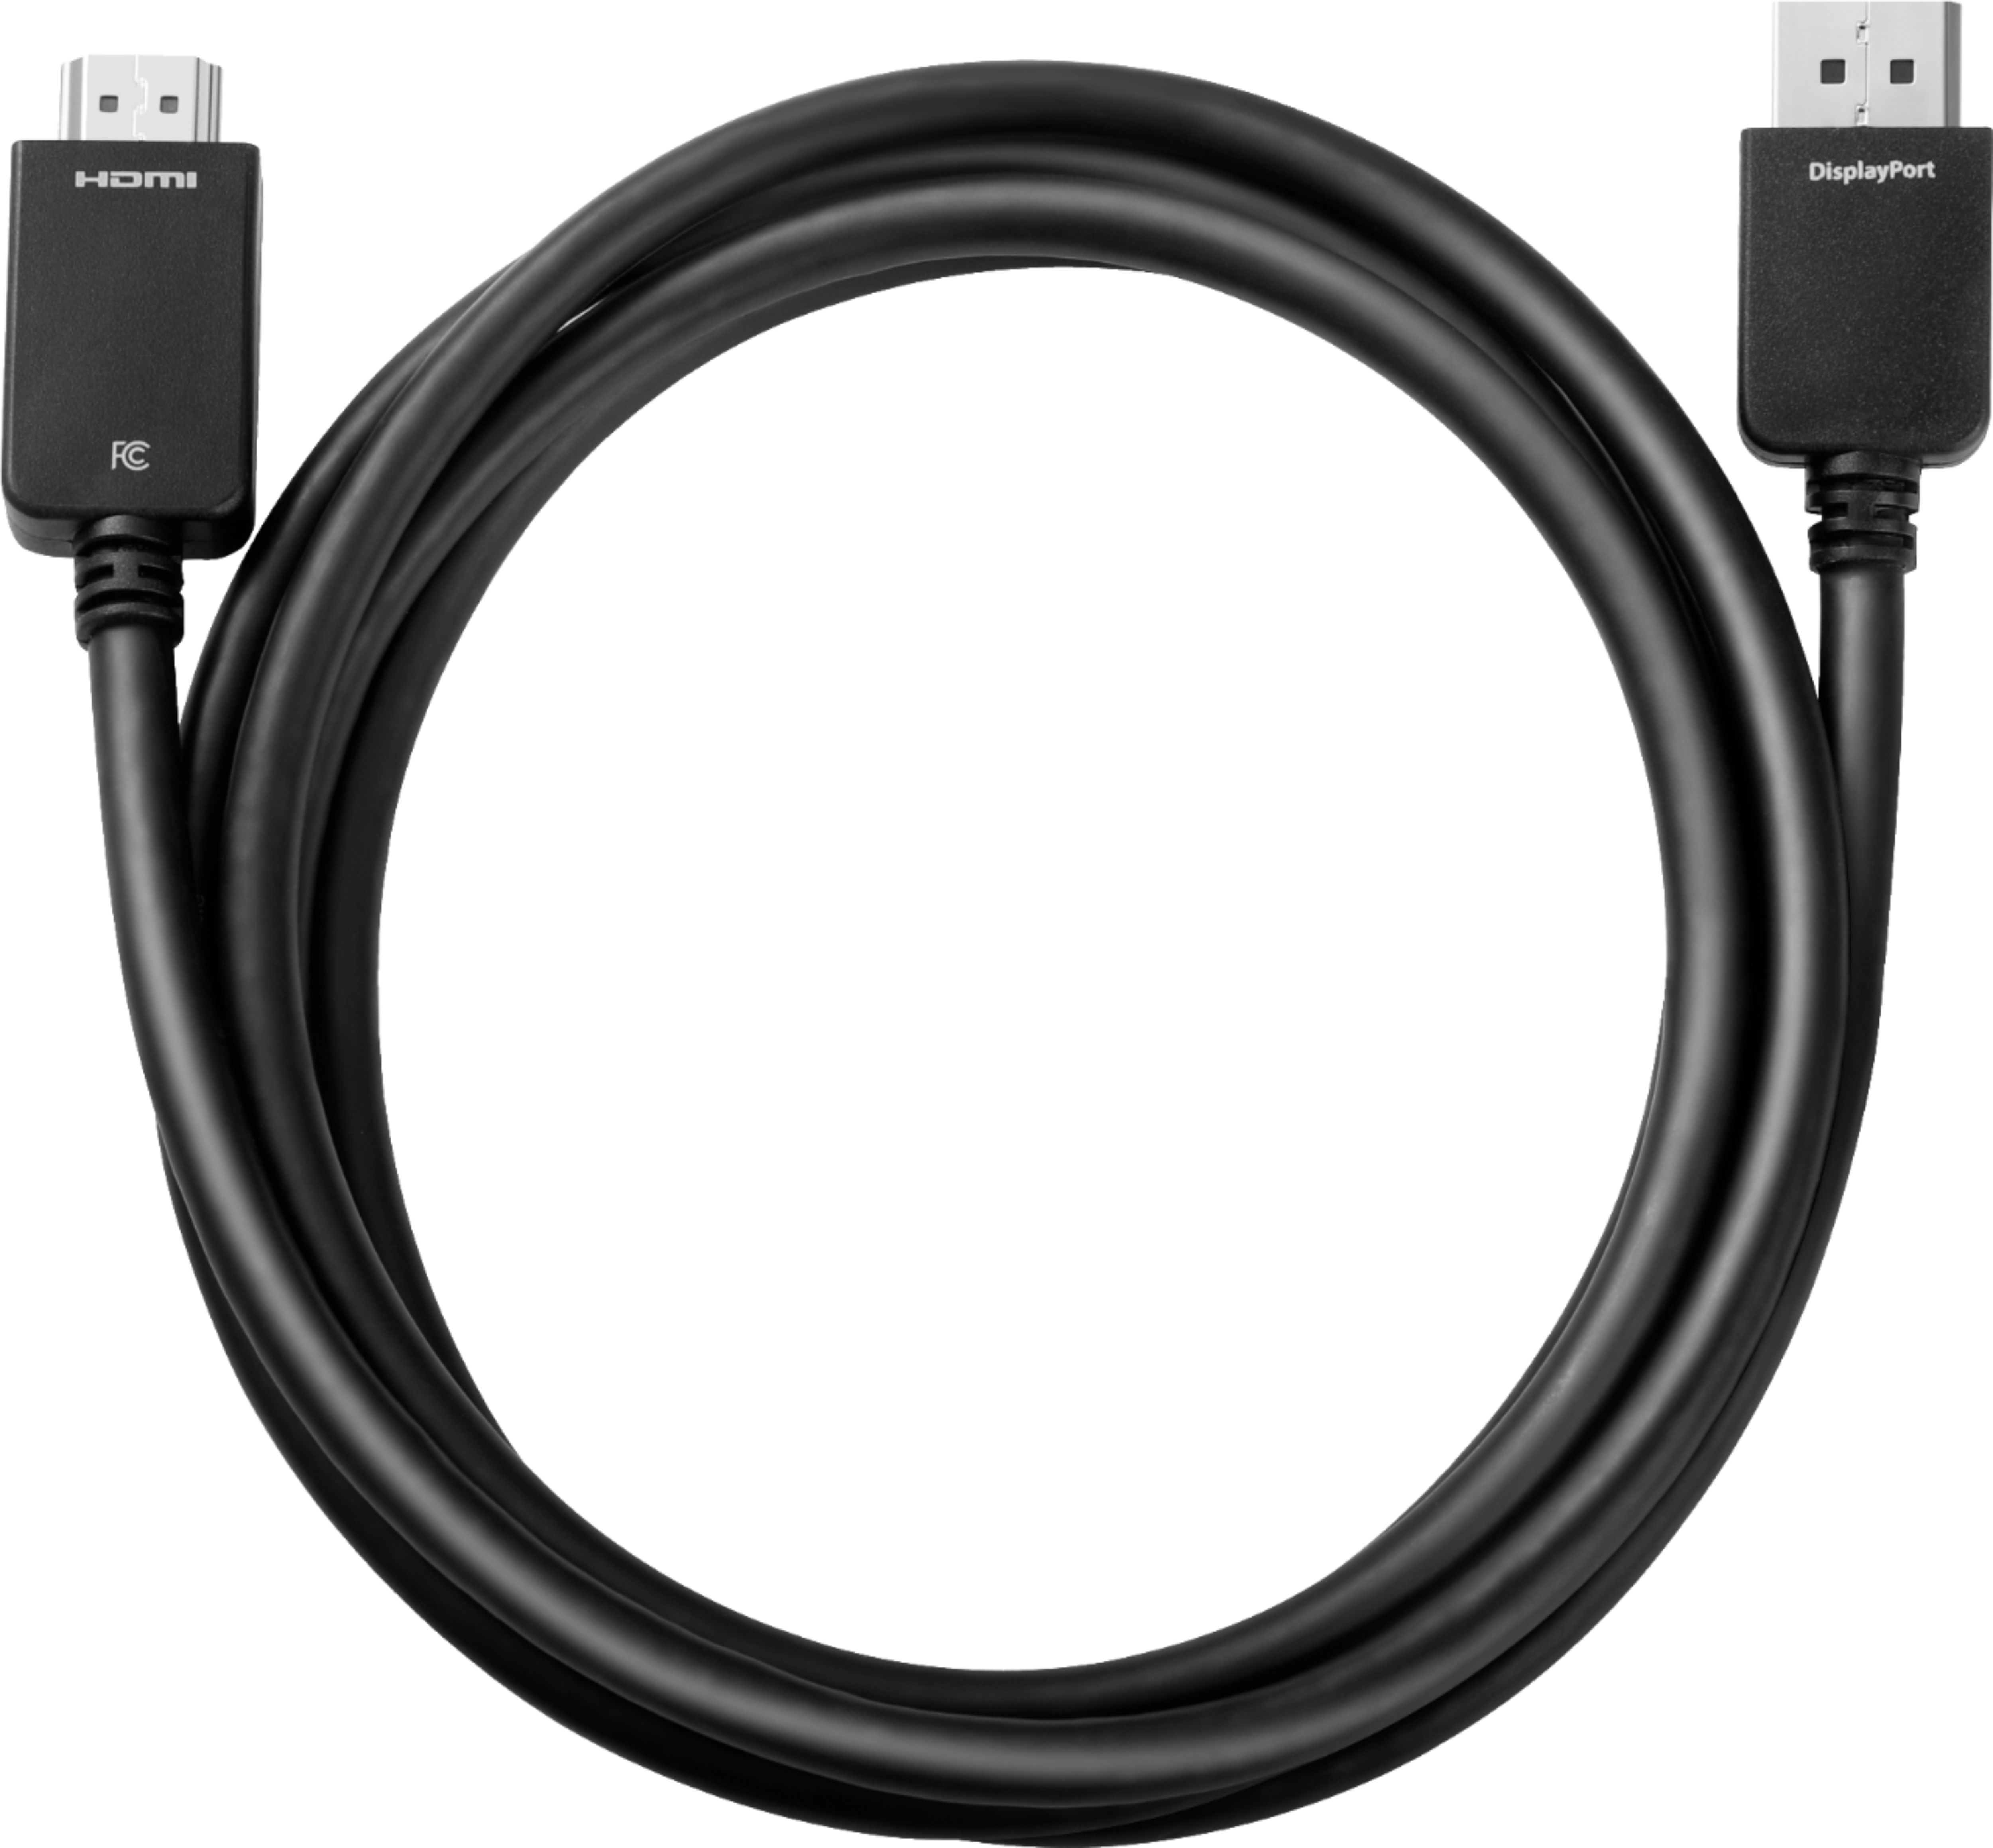 StarTech.com 6' HDMI to DVI-D Video Cable Black  - Best Buy